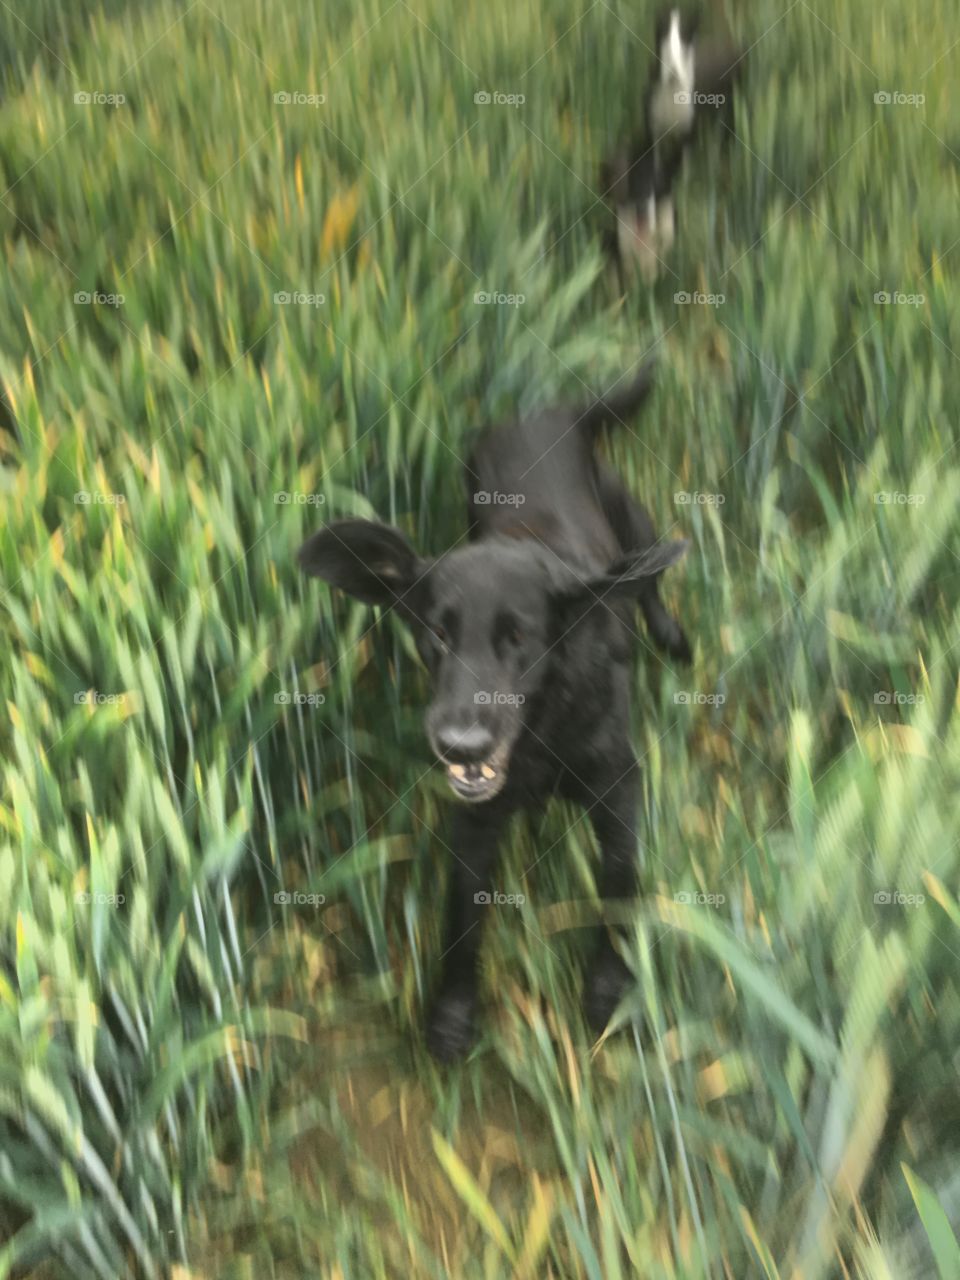 Flatcoat retriever, ears flying, having landed catching a ball in a field of wheat 